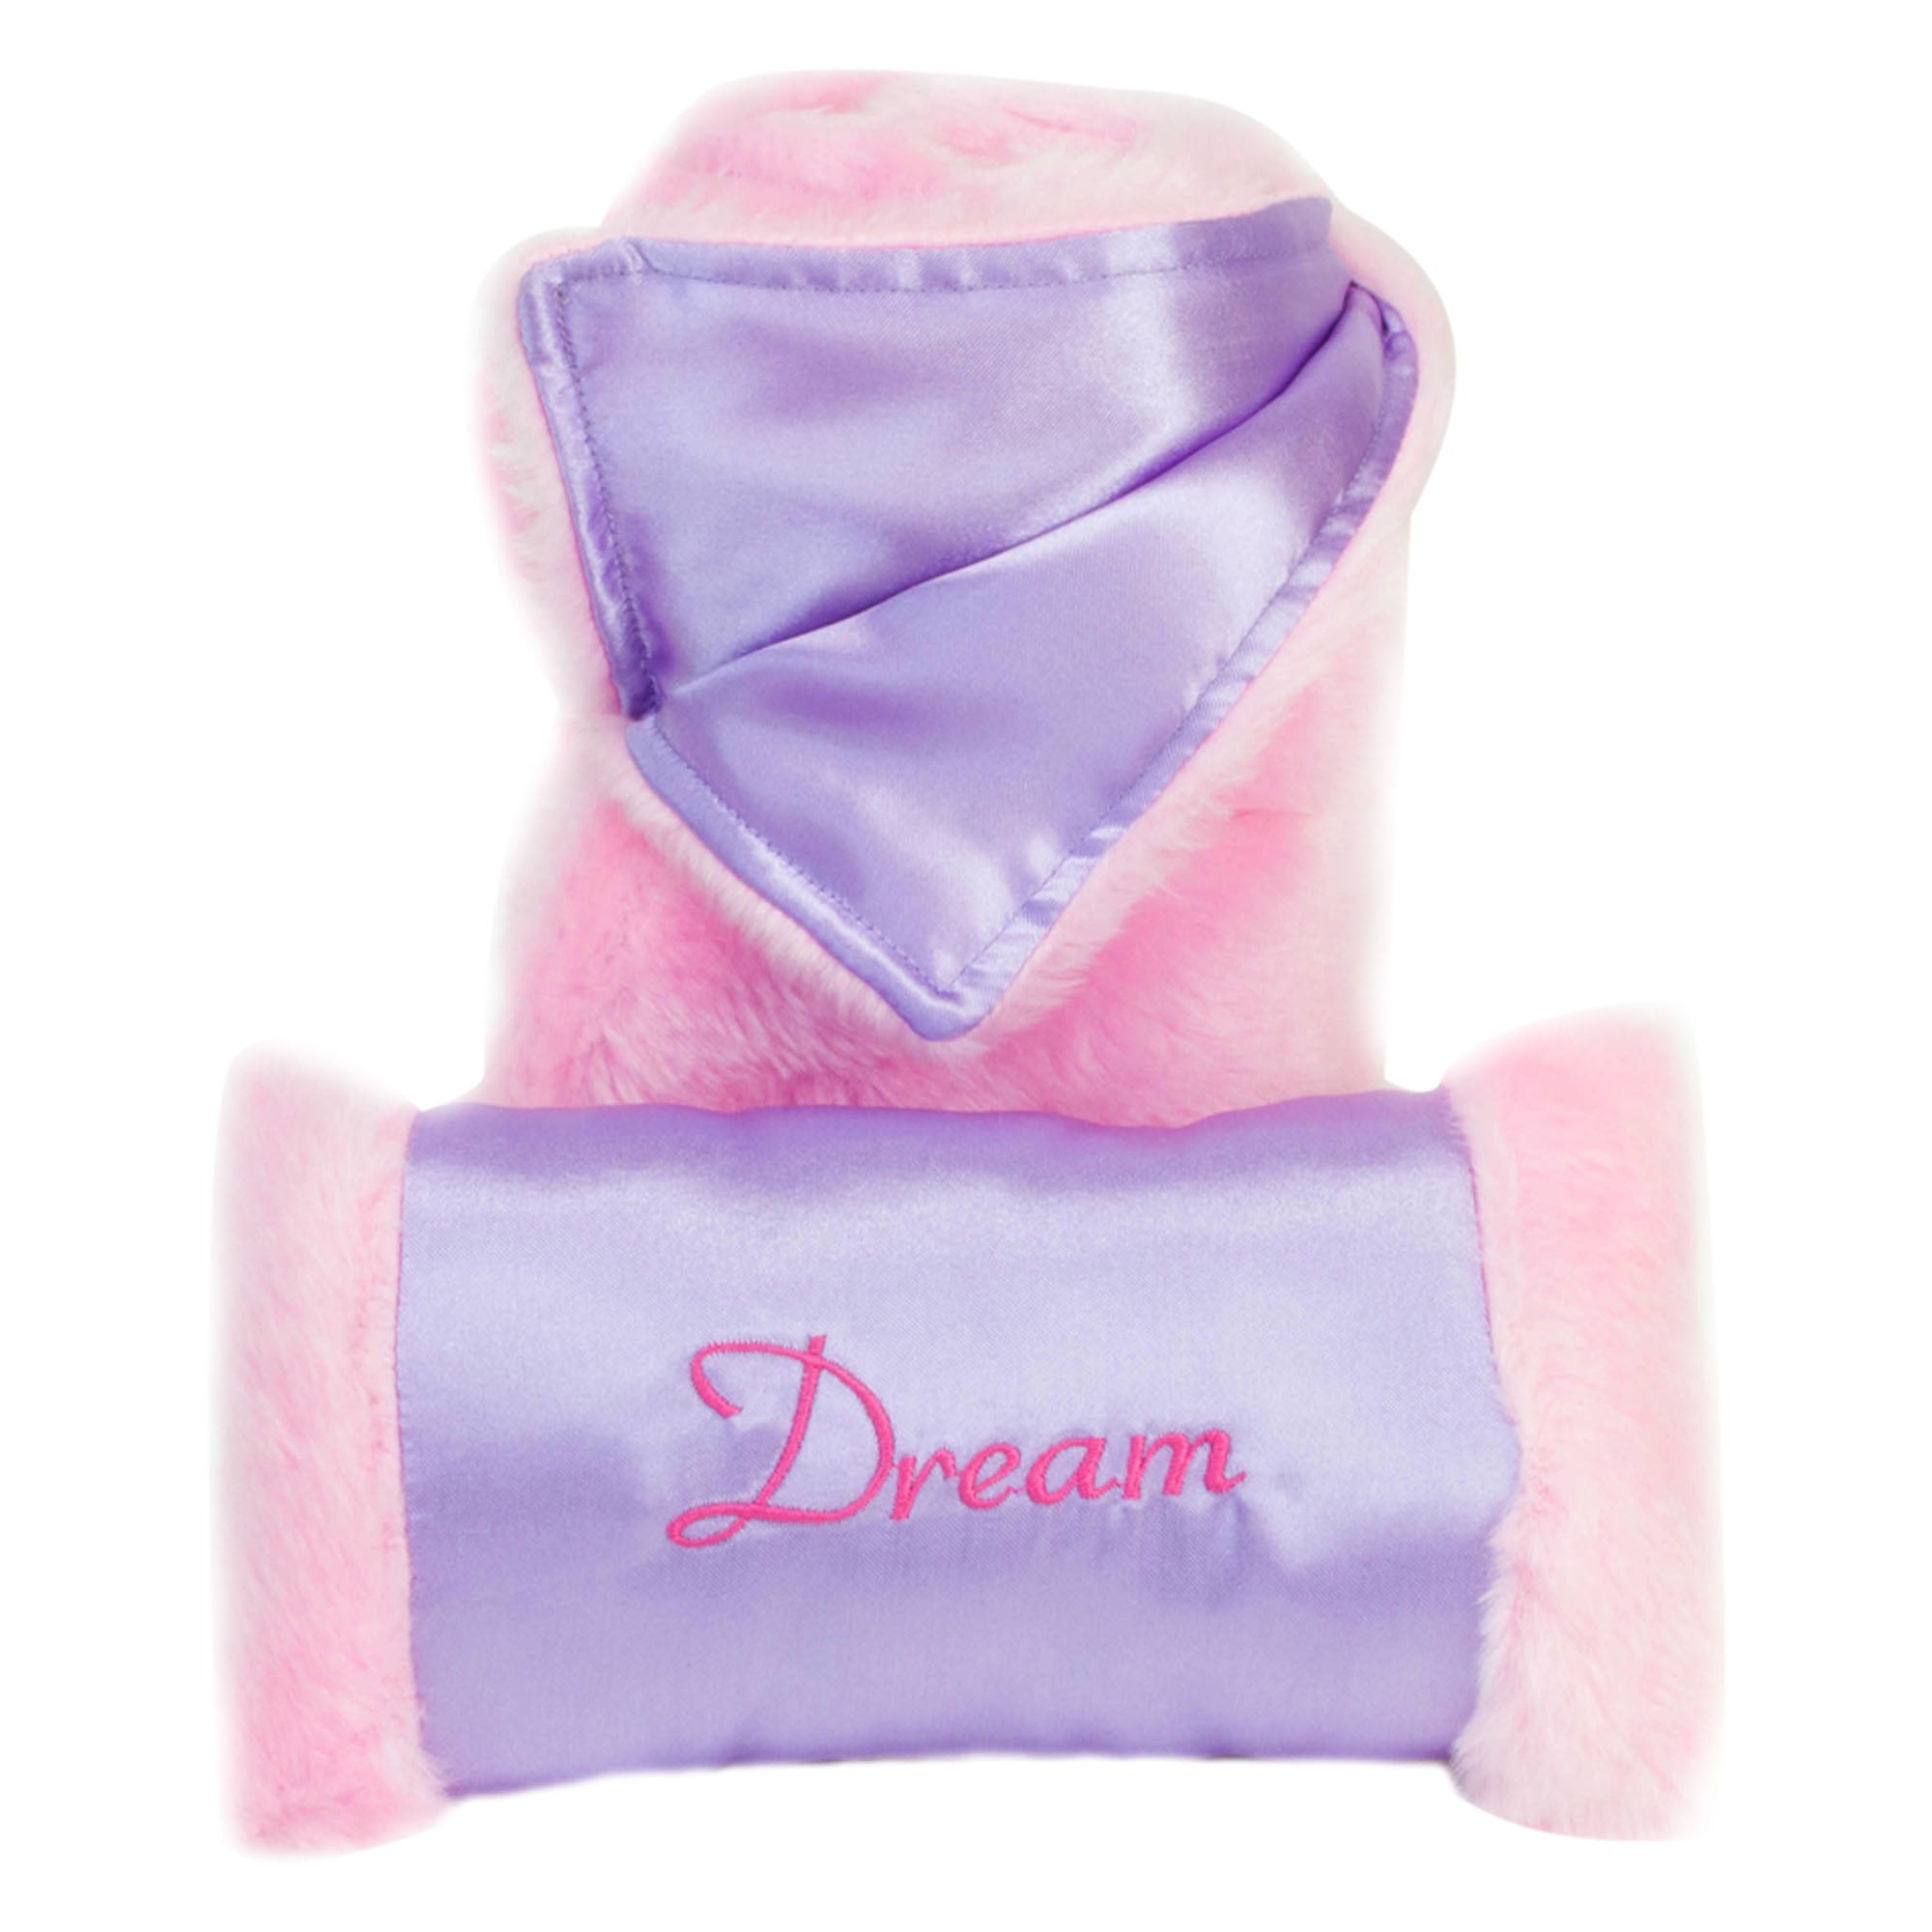 Sophia's Fur/Satin Sleeping Bag and DREAM Pillow for 18" Dolls, Pink/Purple